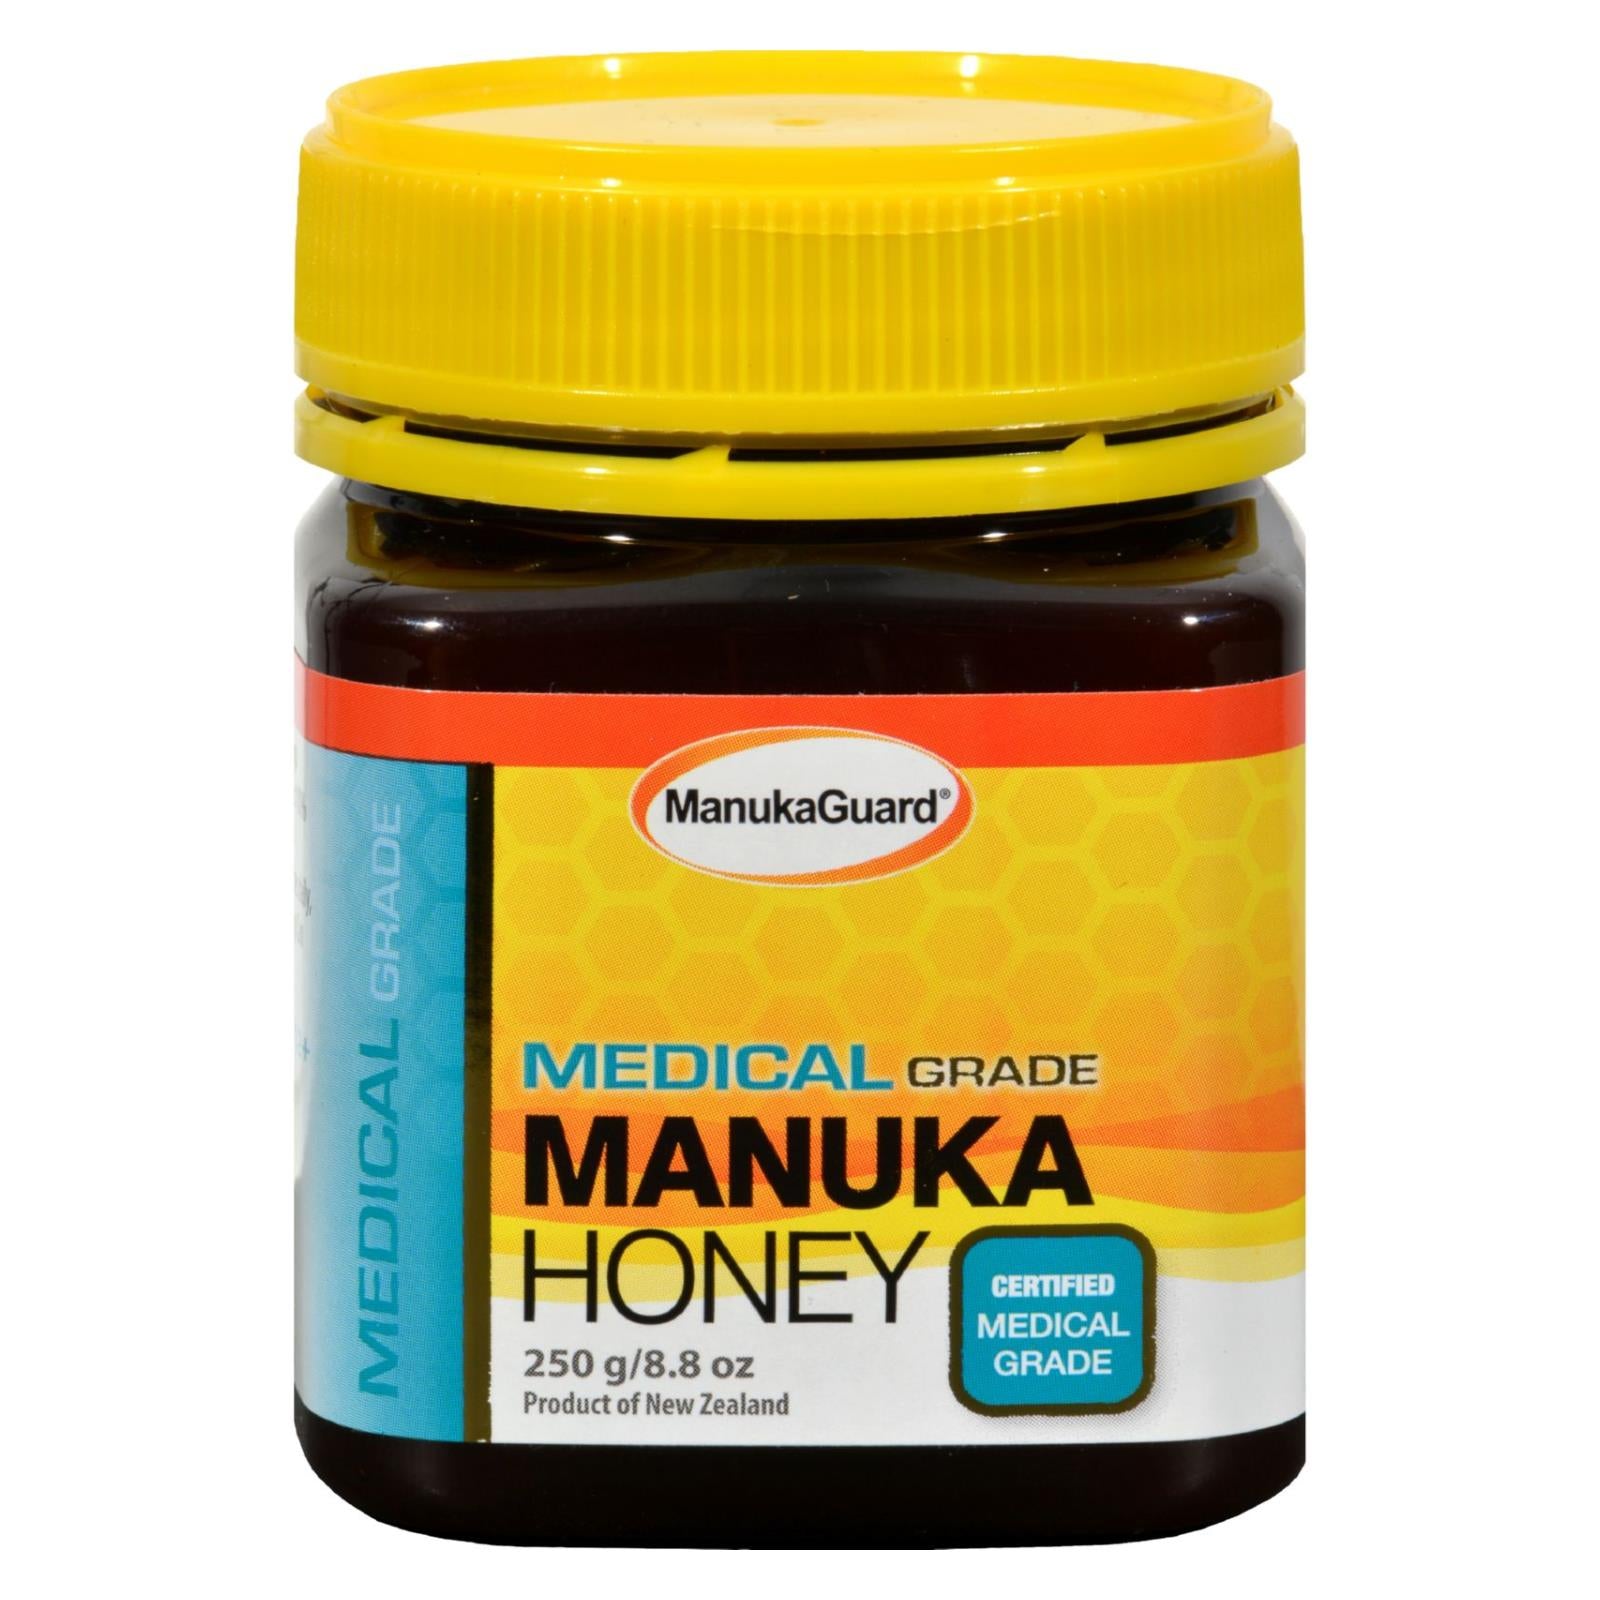 Manukaguard, Miel de Manuka de qualité médicale Manukaguard - 8.8 oz